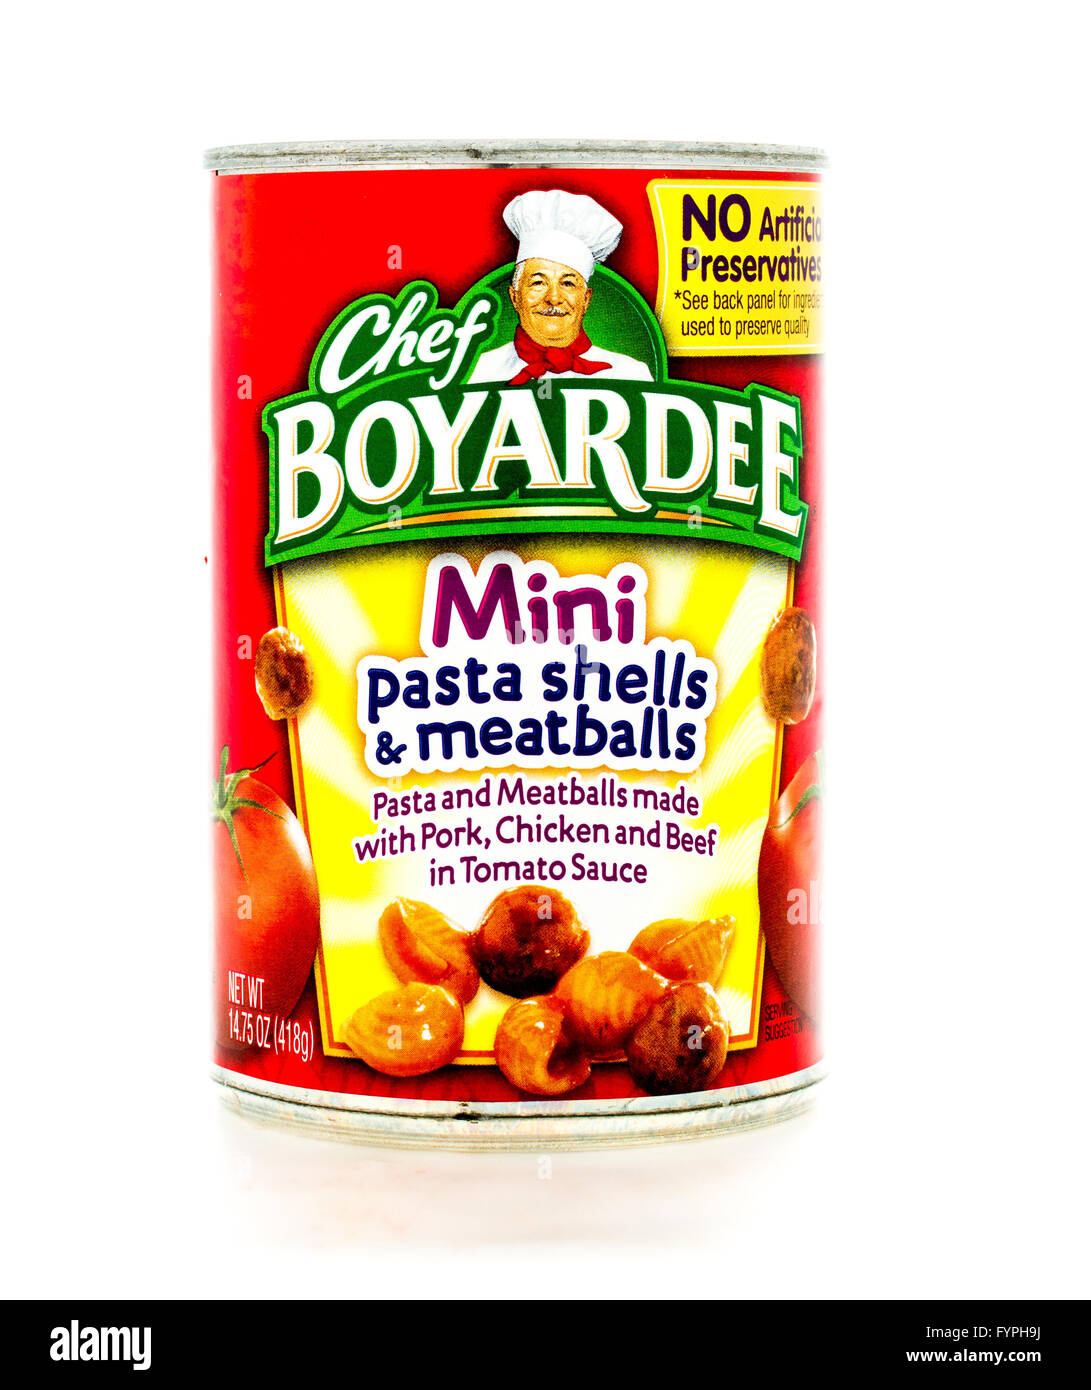 Winneconne, WI - 3 February 2015:  Can of Mini pasta shells & meatballs by Chef Boyardee. Chef Boyardeee has been enjoyed by eve Stock Photo